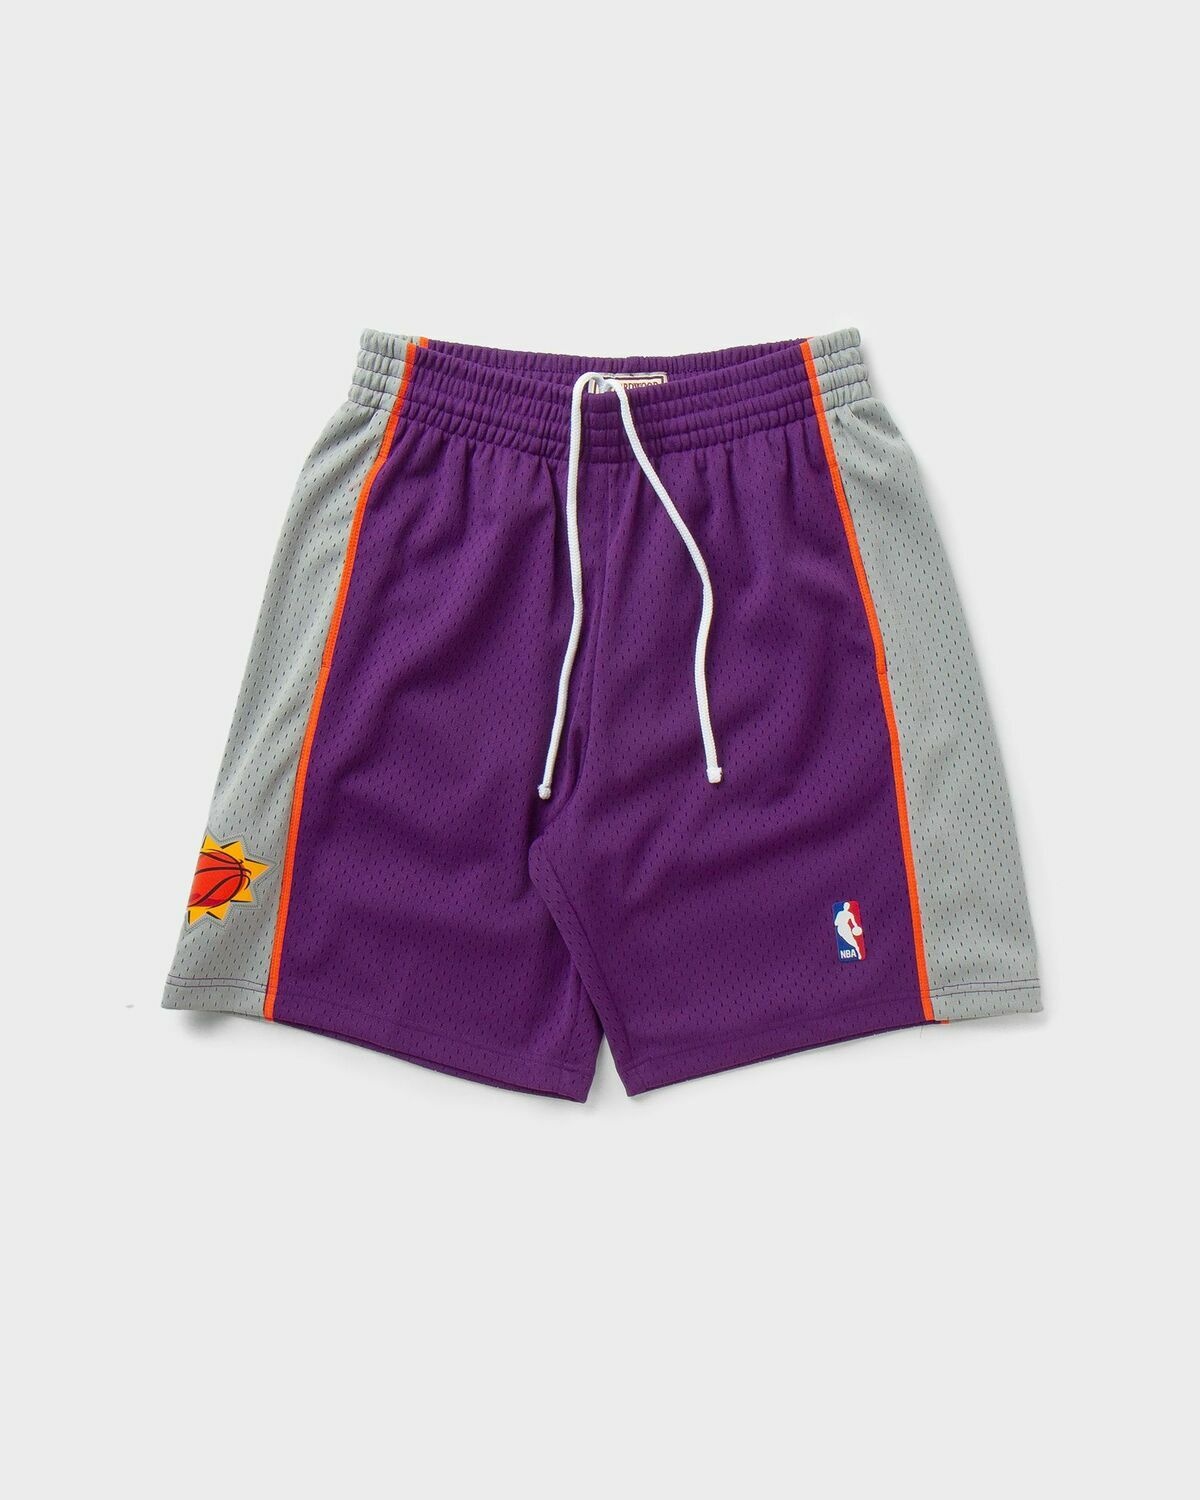 Mitchell & Ness Nba Swingman Shorts Phoenix Suns 2001 02 Purple - Mens - Sport & Team Shorts